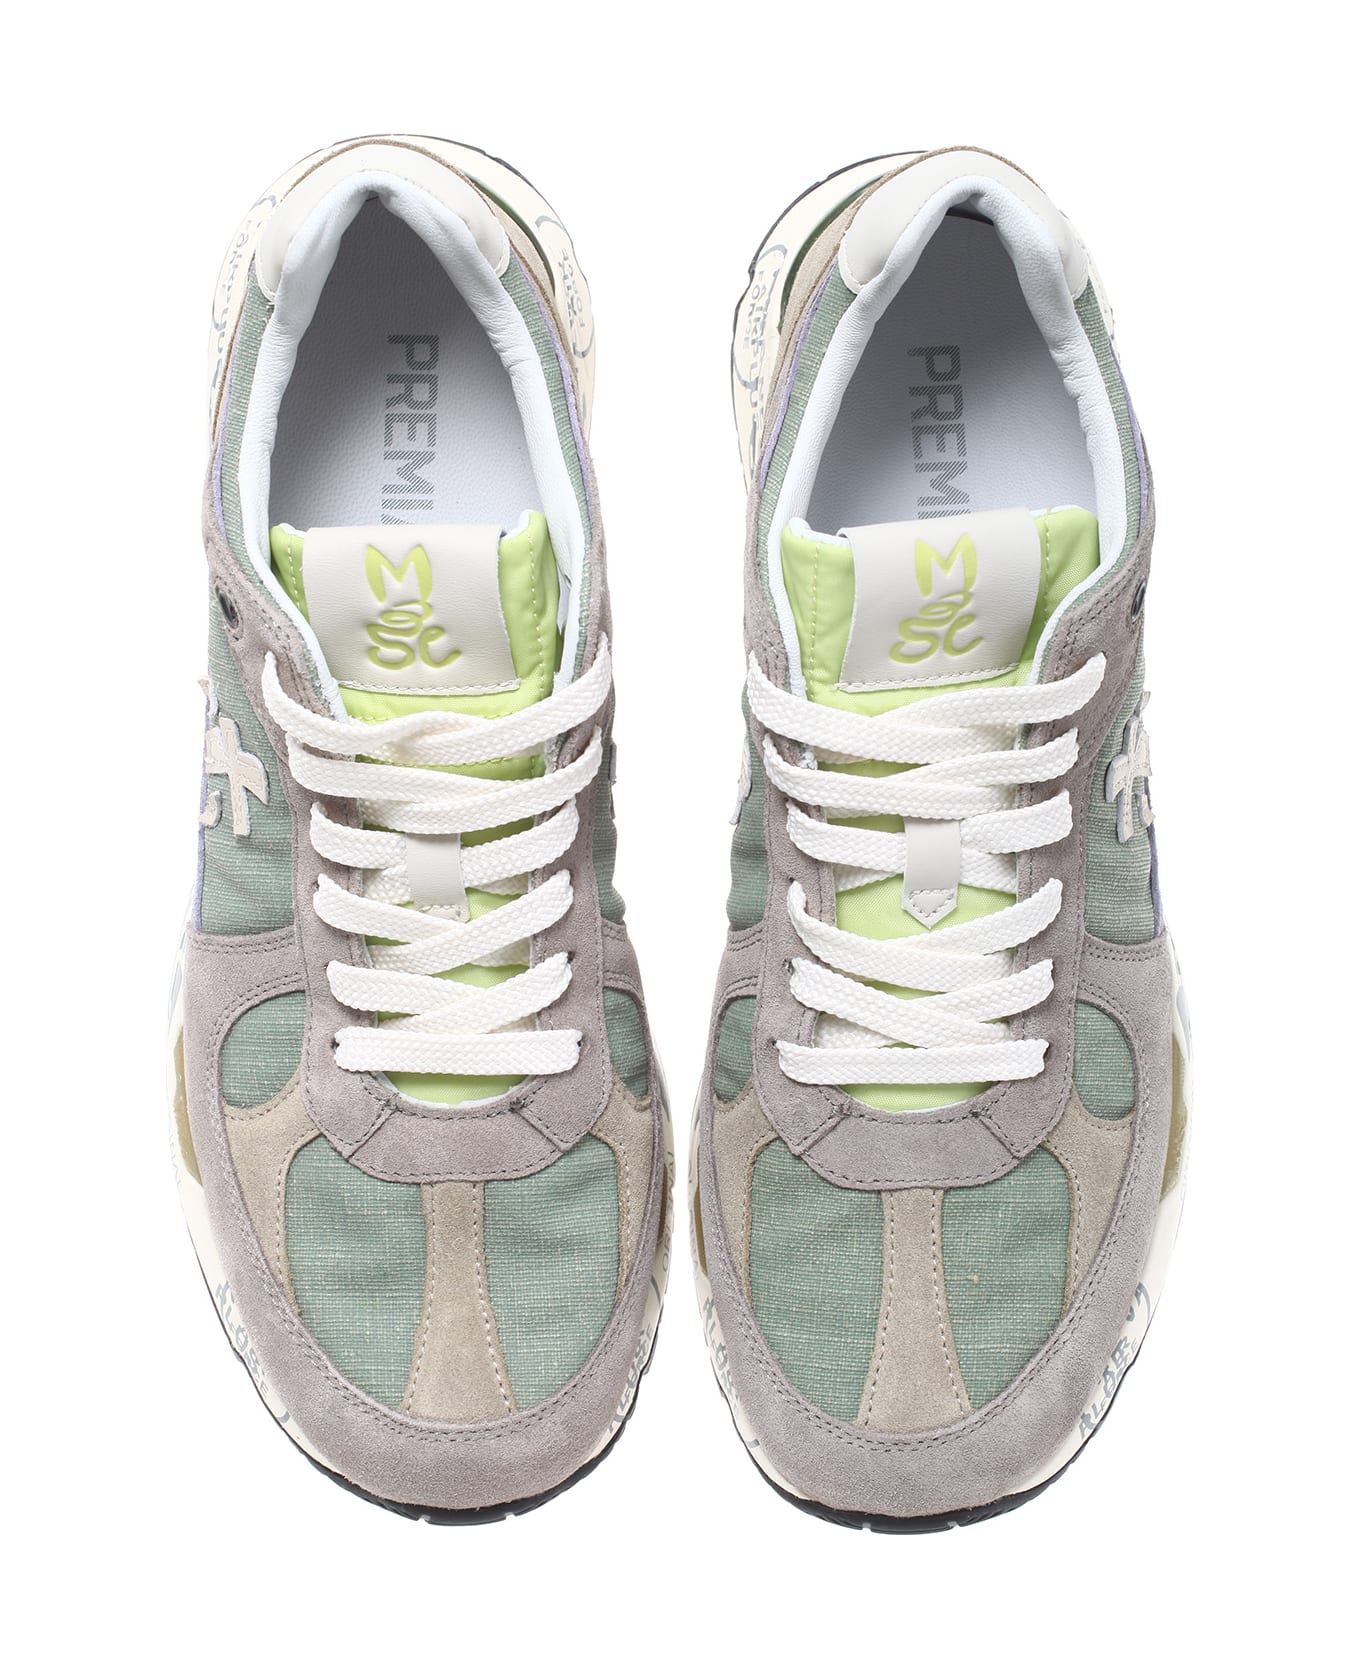 Premiata Flat Shoes Green - Green